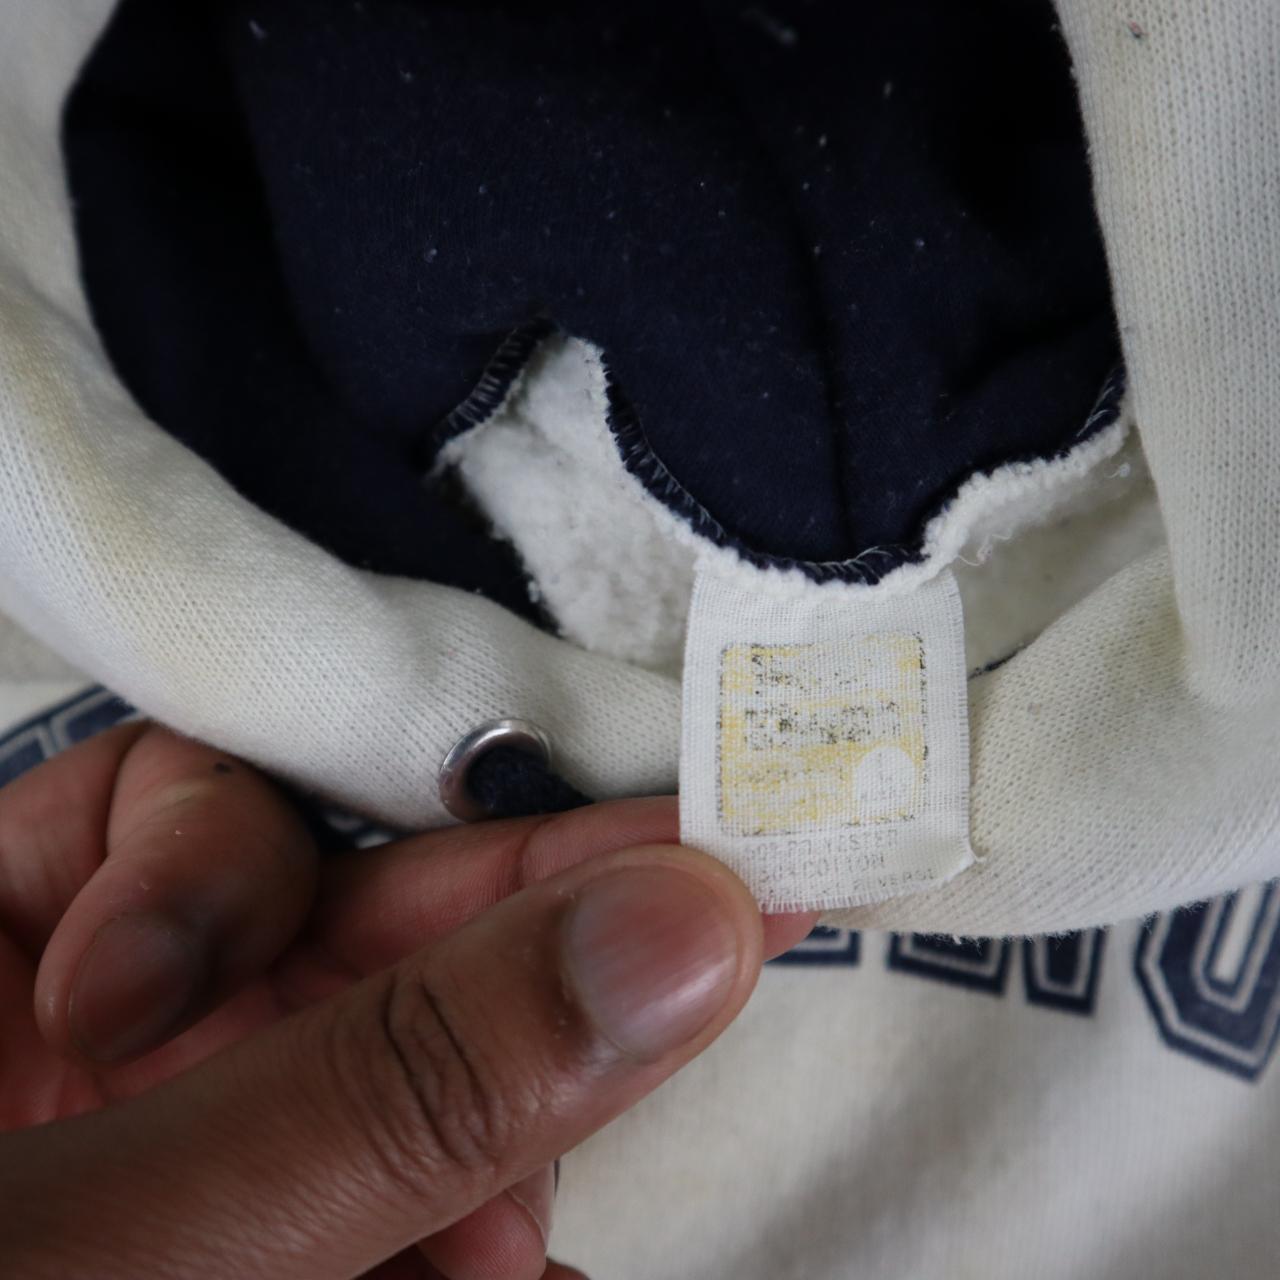 Product Image 4 - Vintage Muskingum College hoodie

SIZE: L

MEASUREMENTS

WIDTH: